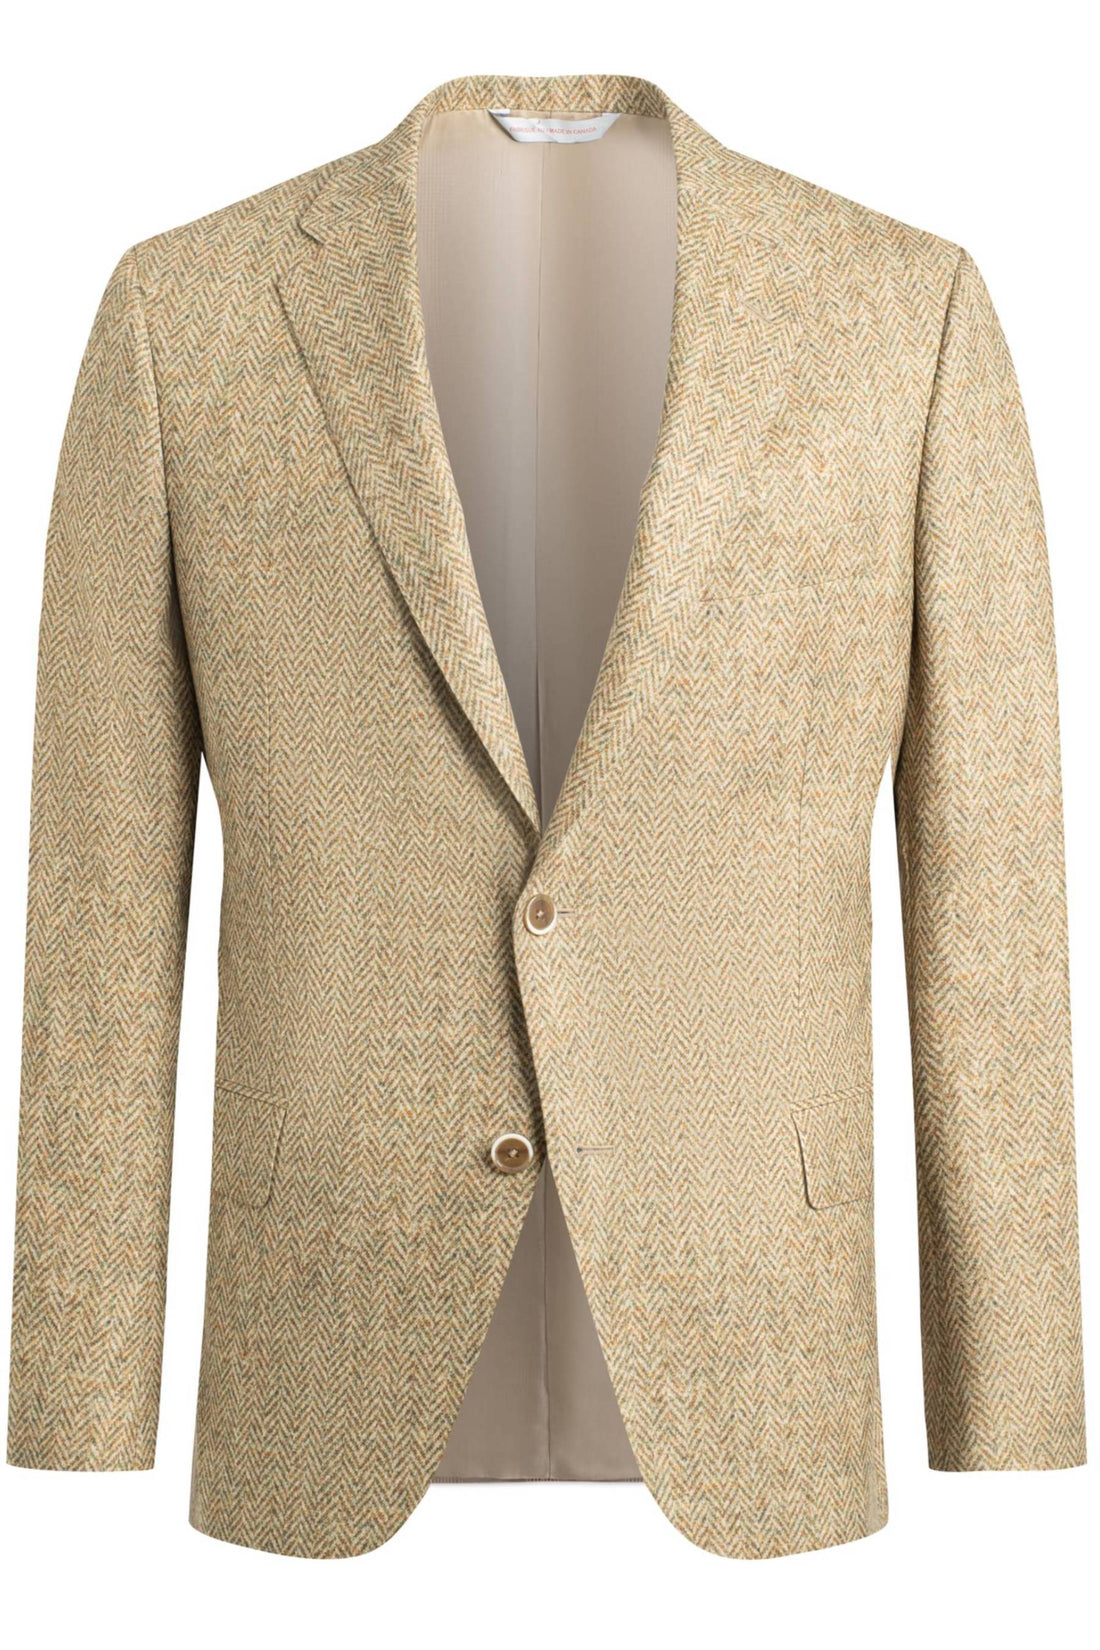 Samuelsohn Tan Tweed Herringbone Jacket front